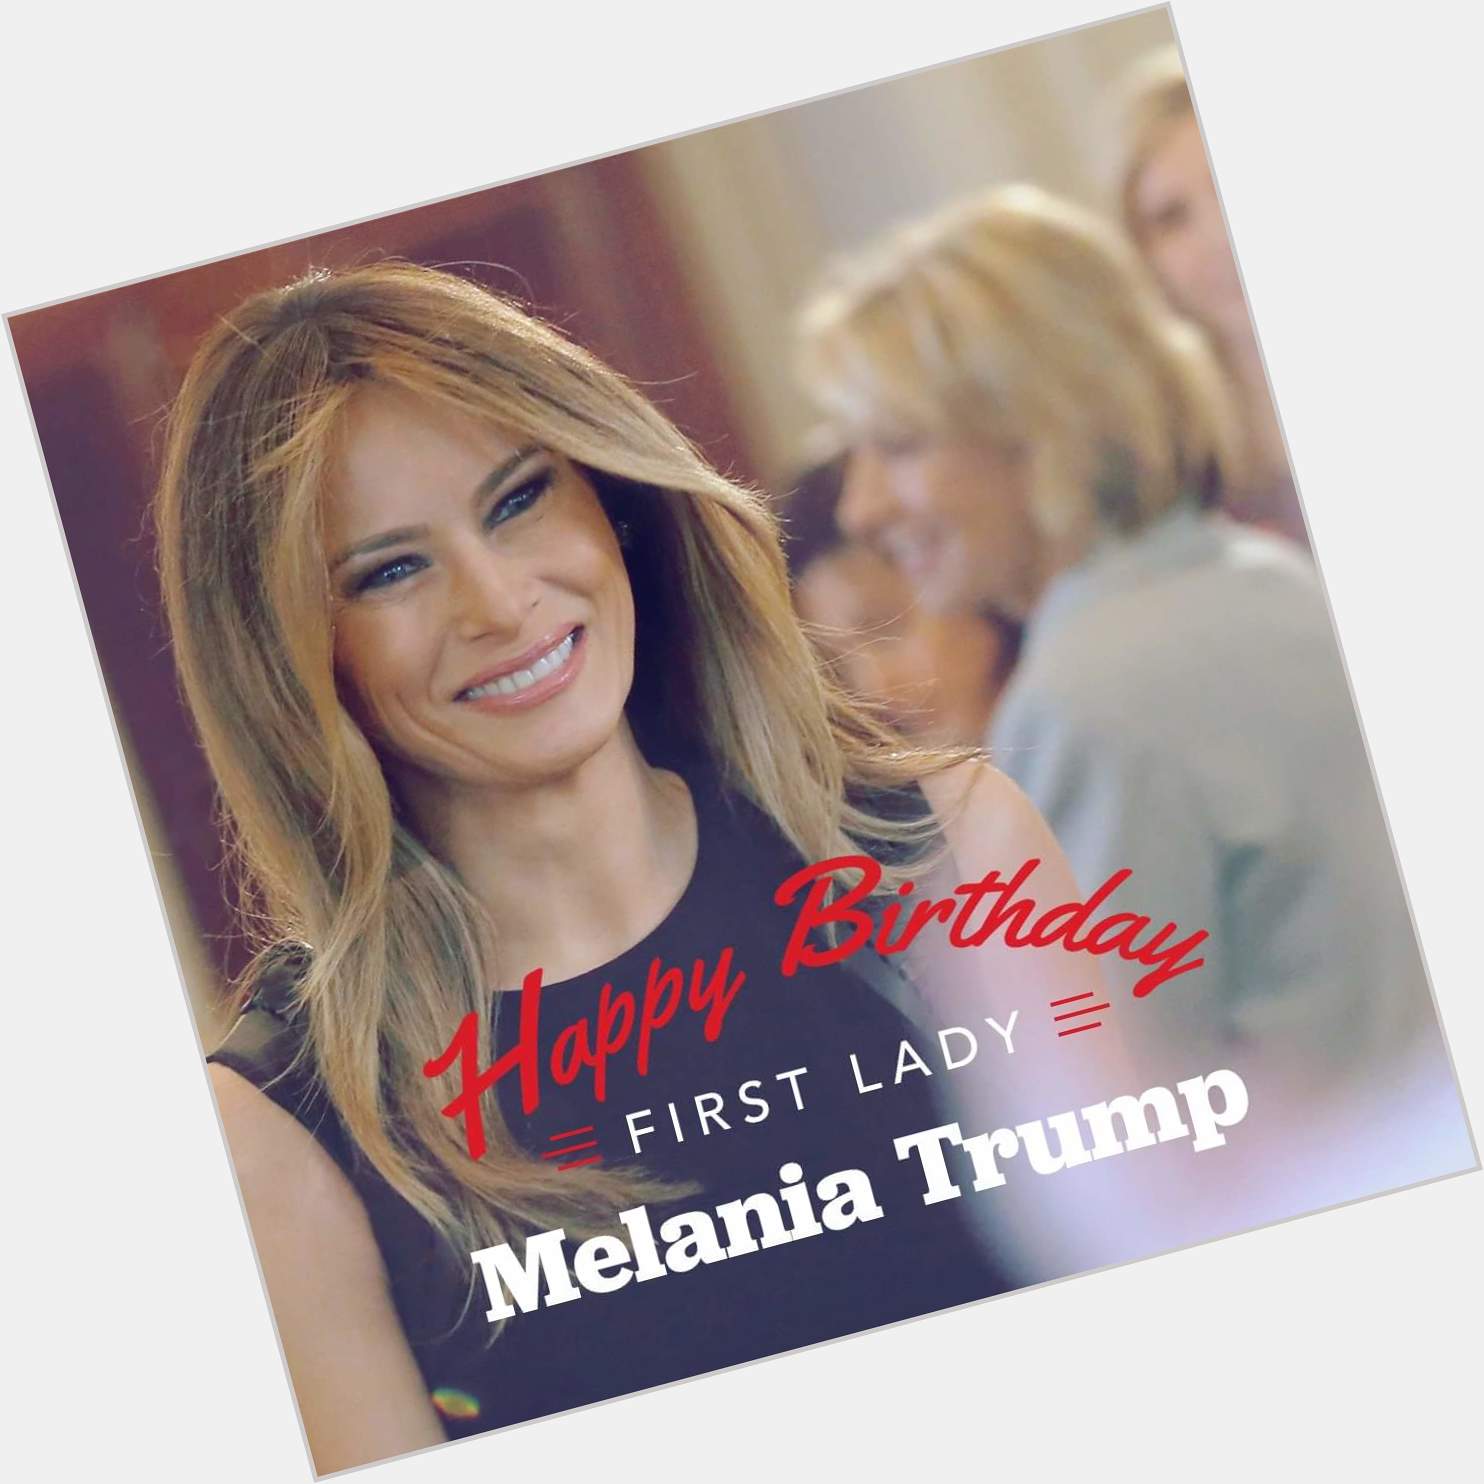 Wishing First Lady, Melania Trump a Very Happy Birthday today!  